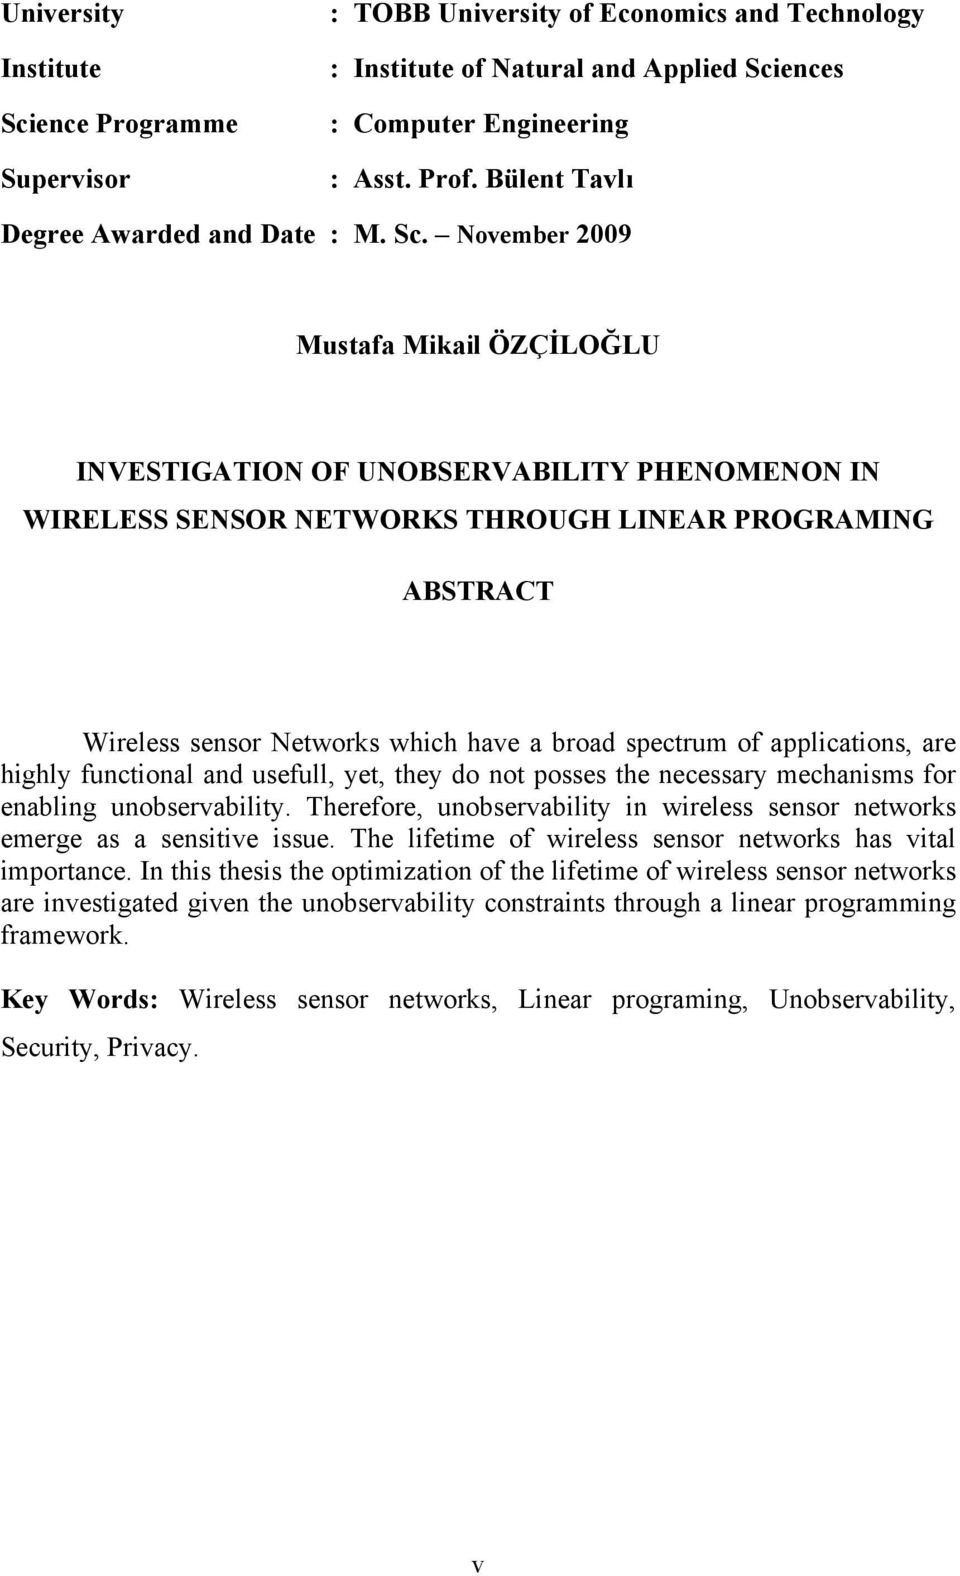 November 2009 Mustafa Mikail ÖZÇİLOĞLU INVESTIGATION OF UNOBSERVABILITY PHENOMENON IN WIRELESS SENSOR NETWORKS THROUGH LINEAR PROGRAMING ABSTRACT Wireless sensor Networks which have a broad spectrum